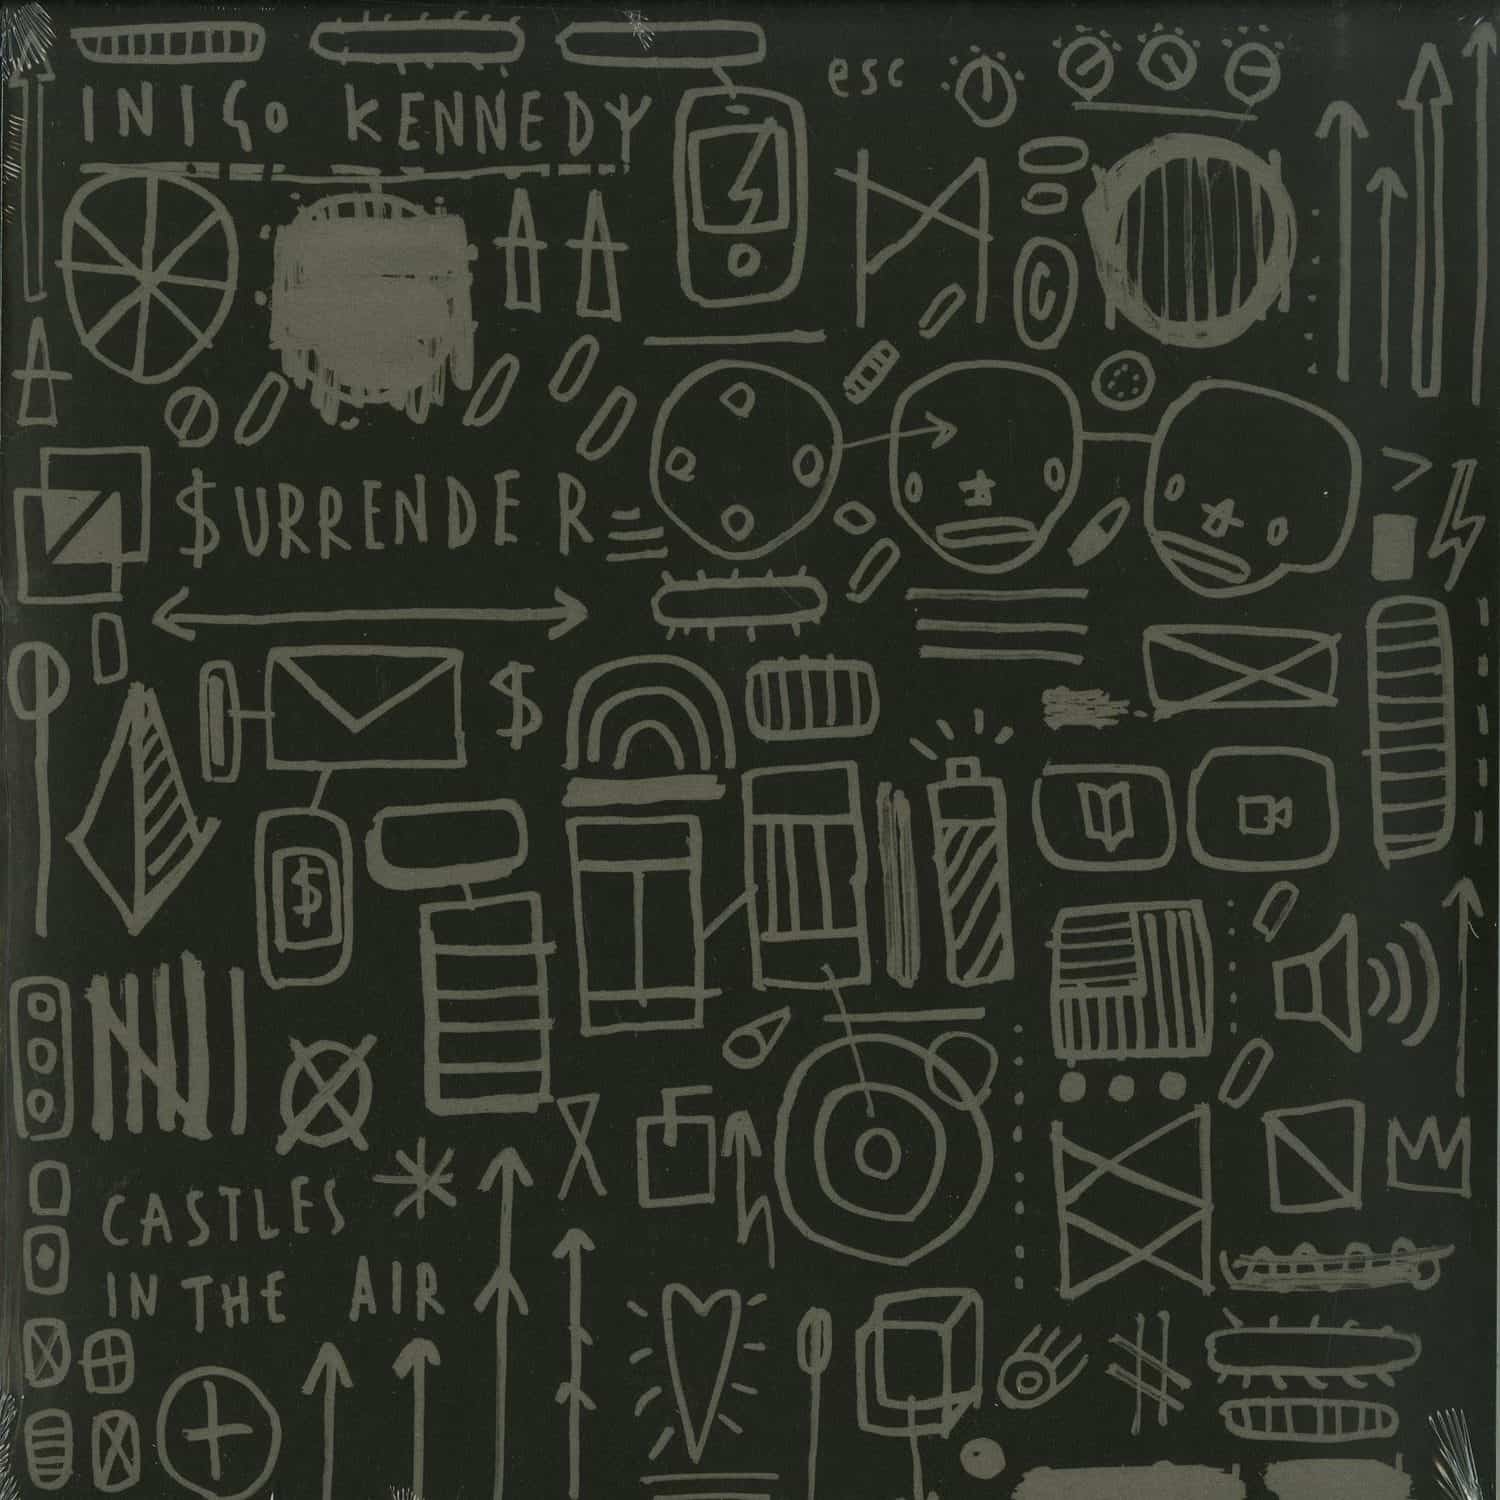 Inigo Kennedy - SURRENDER / CASTLES IN THE AIR